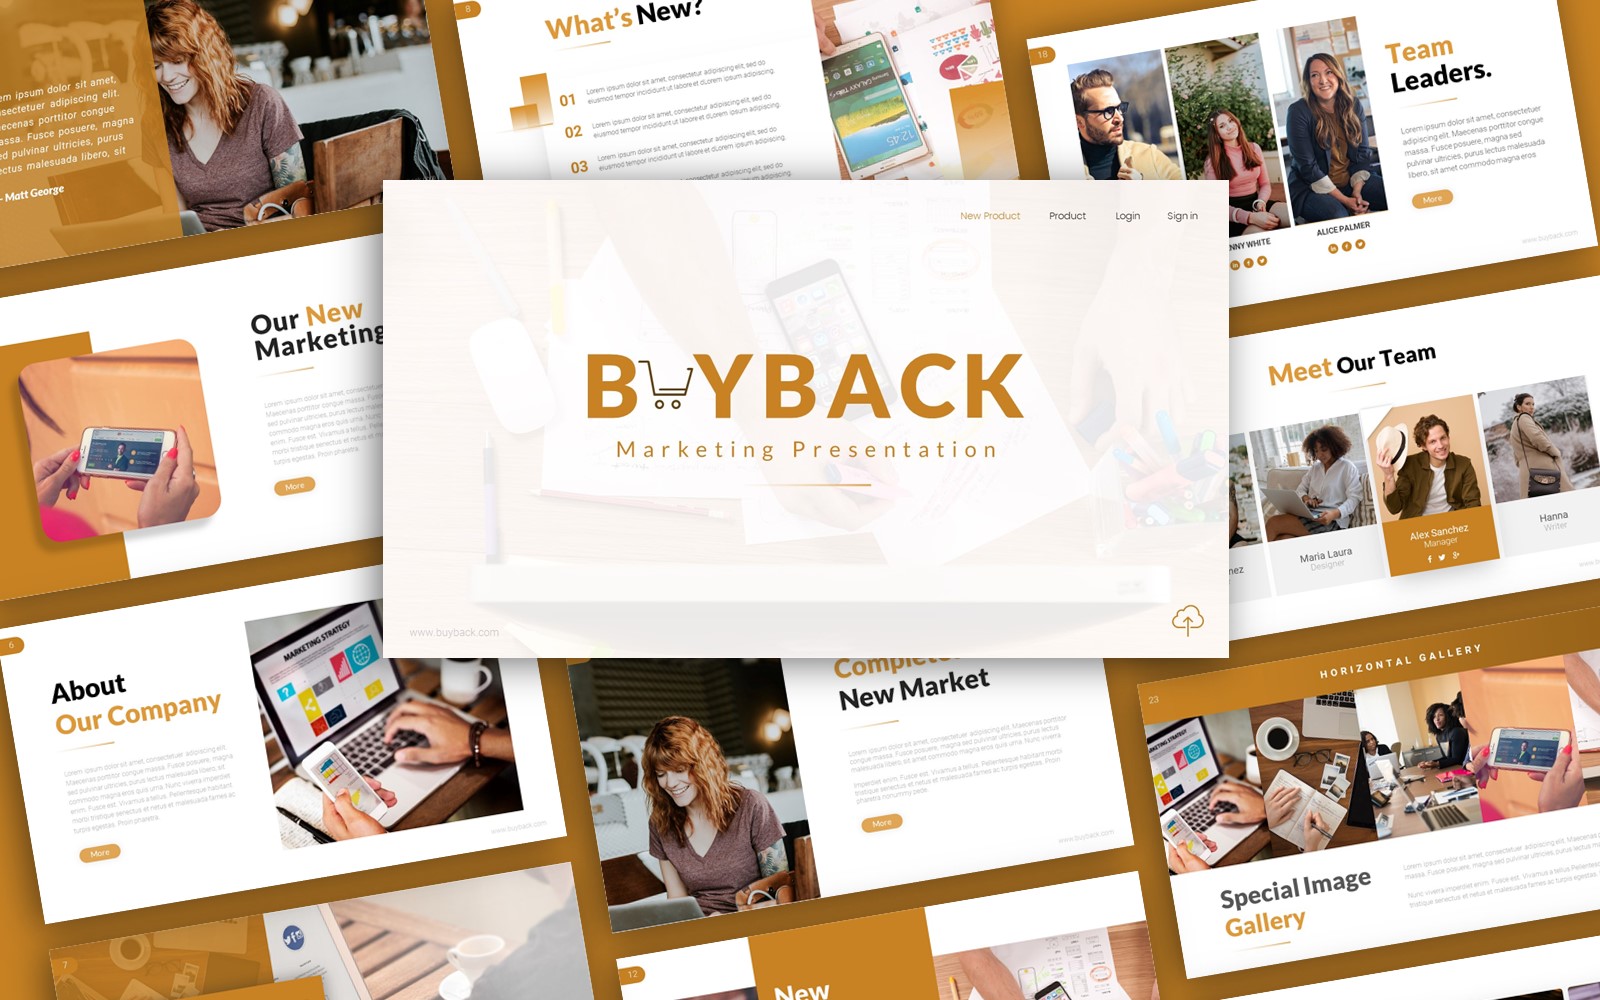 Buyback Marketing Presentation PowerPoint Template